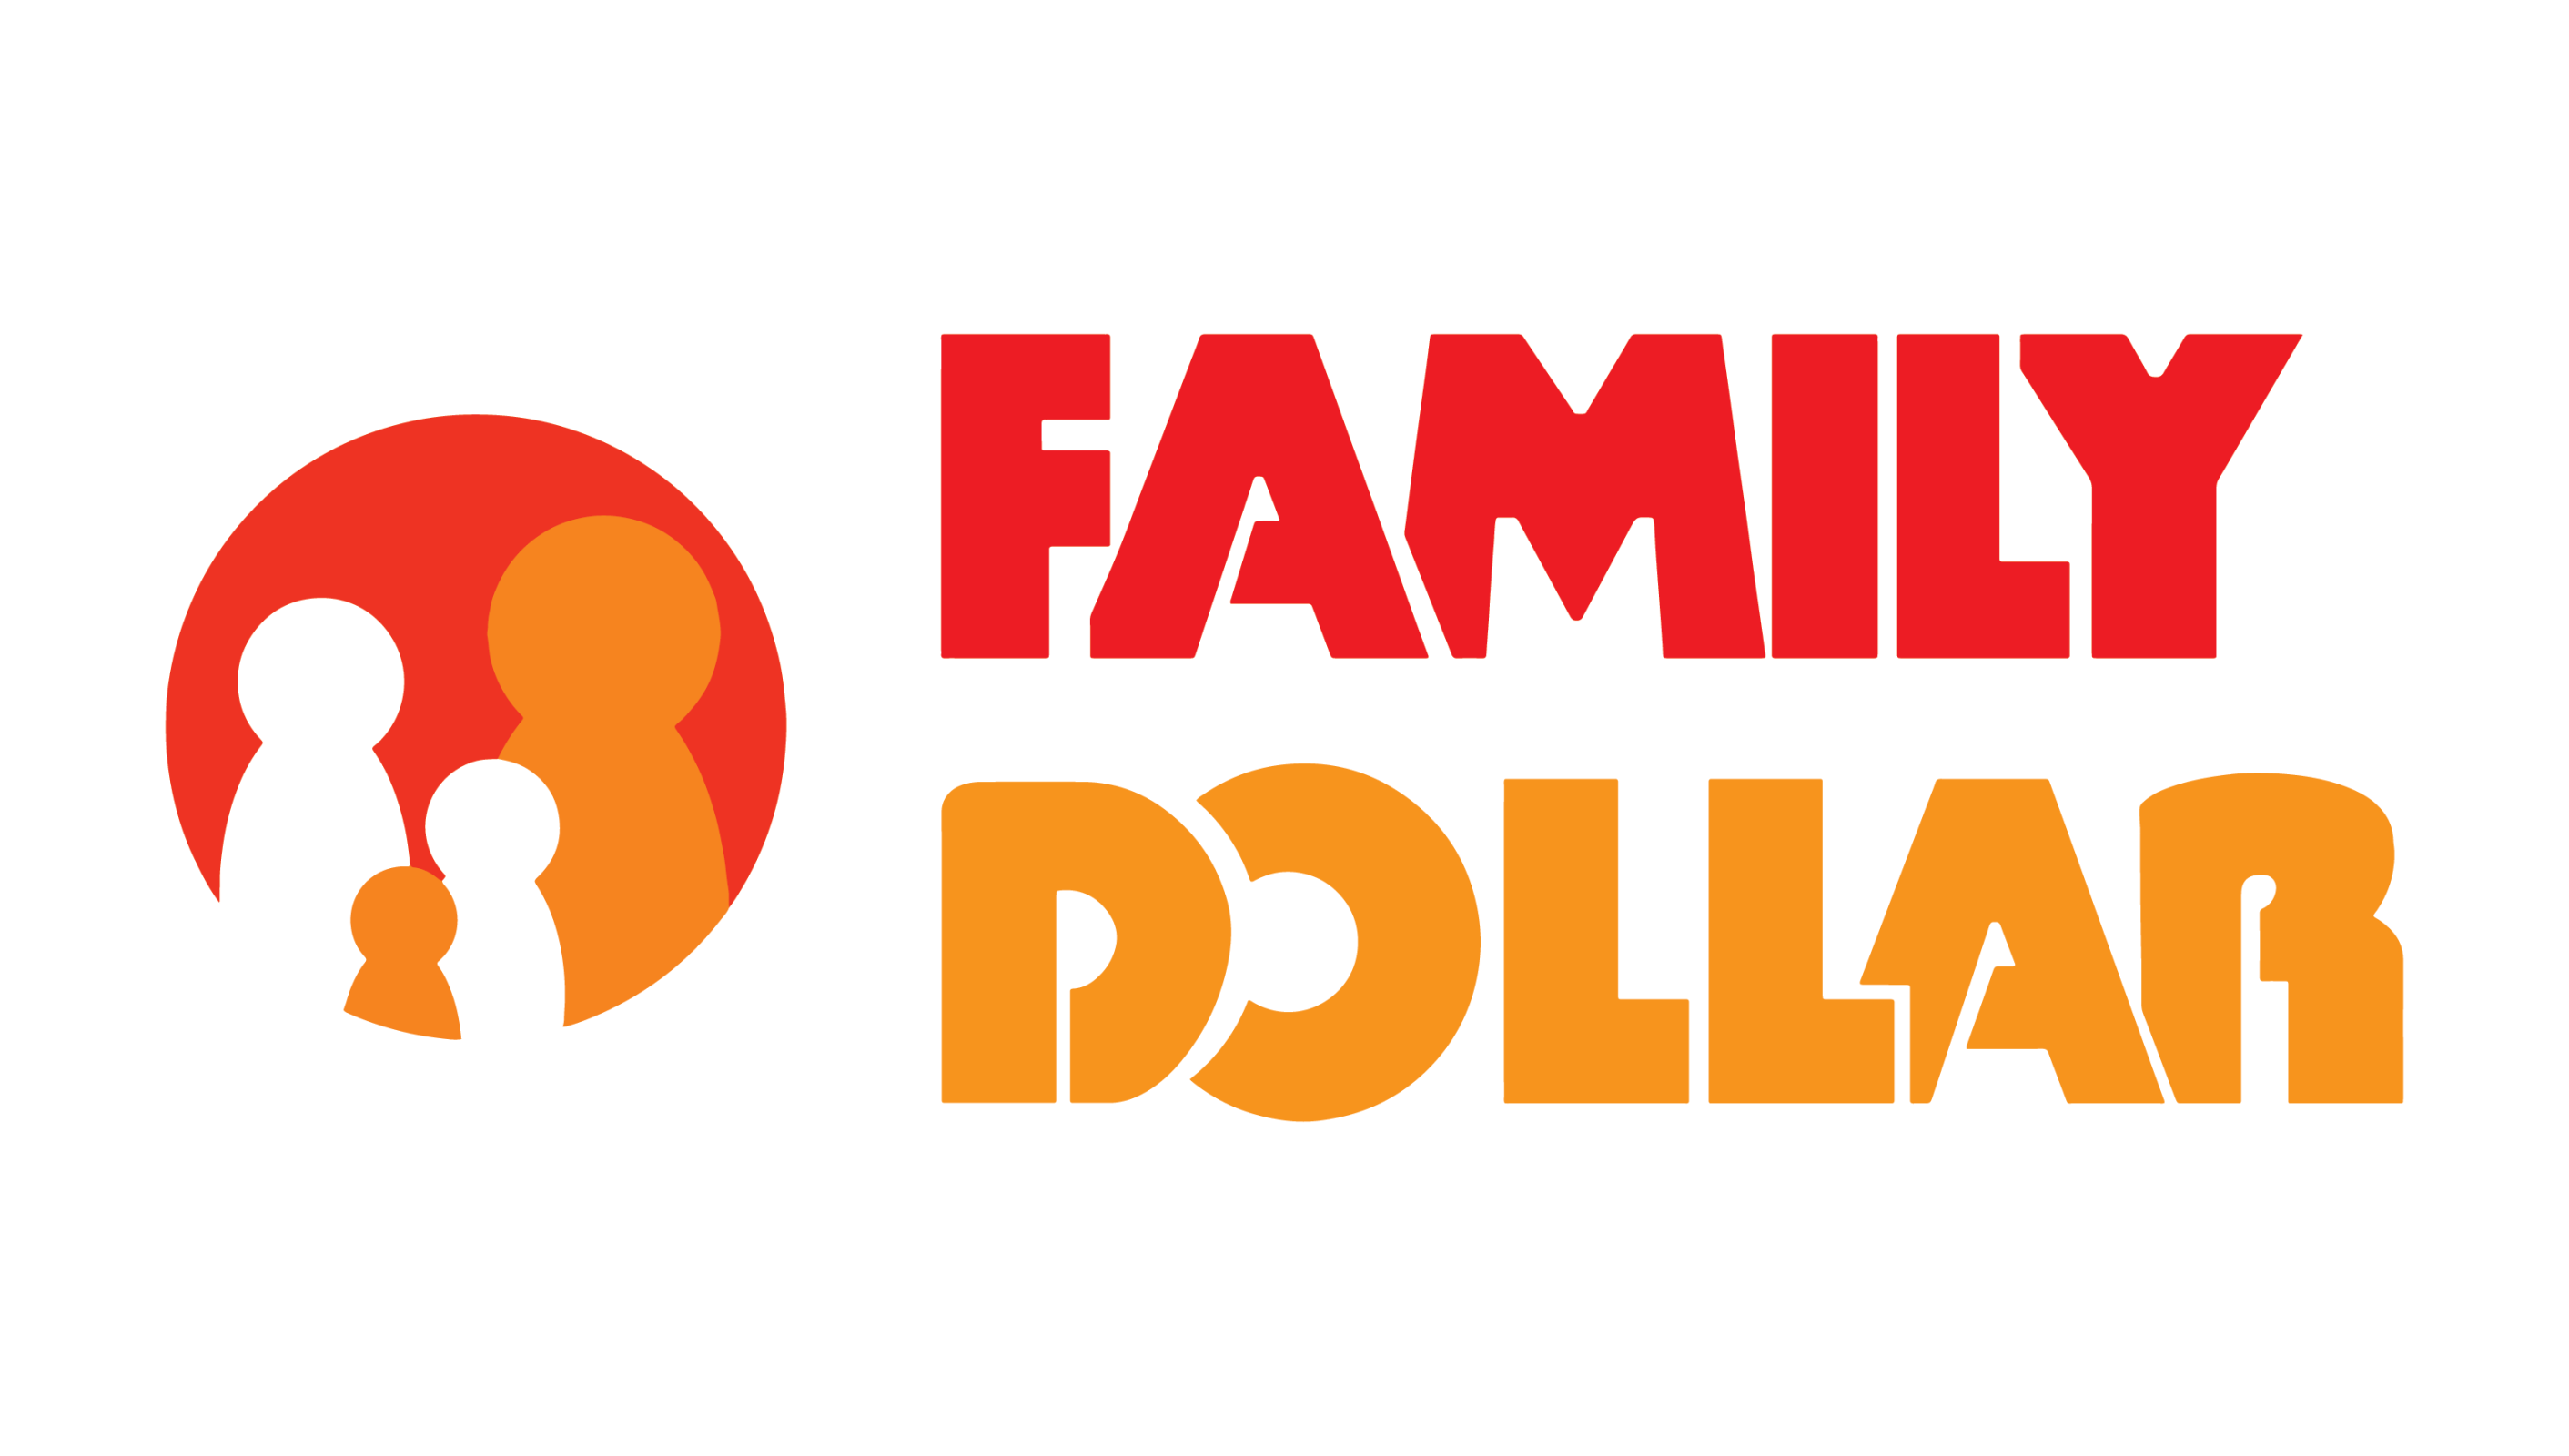 Family Dollar's Image